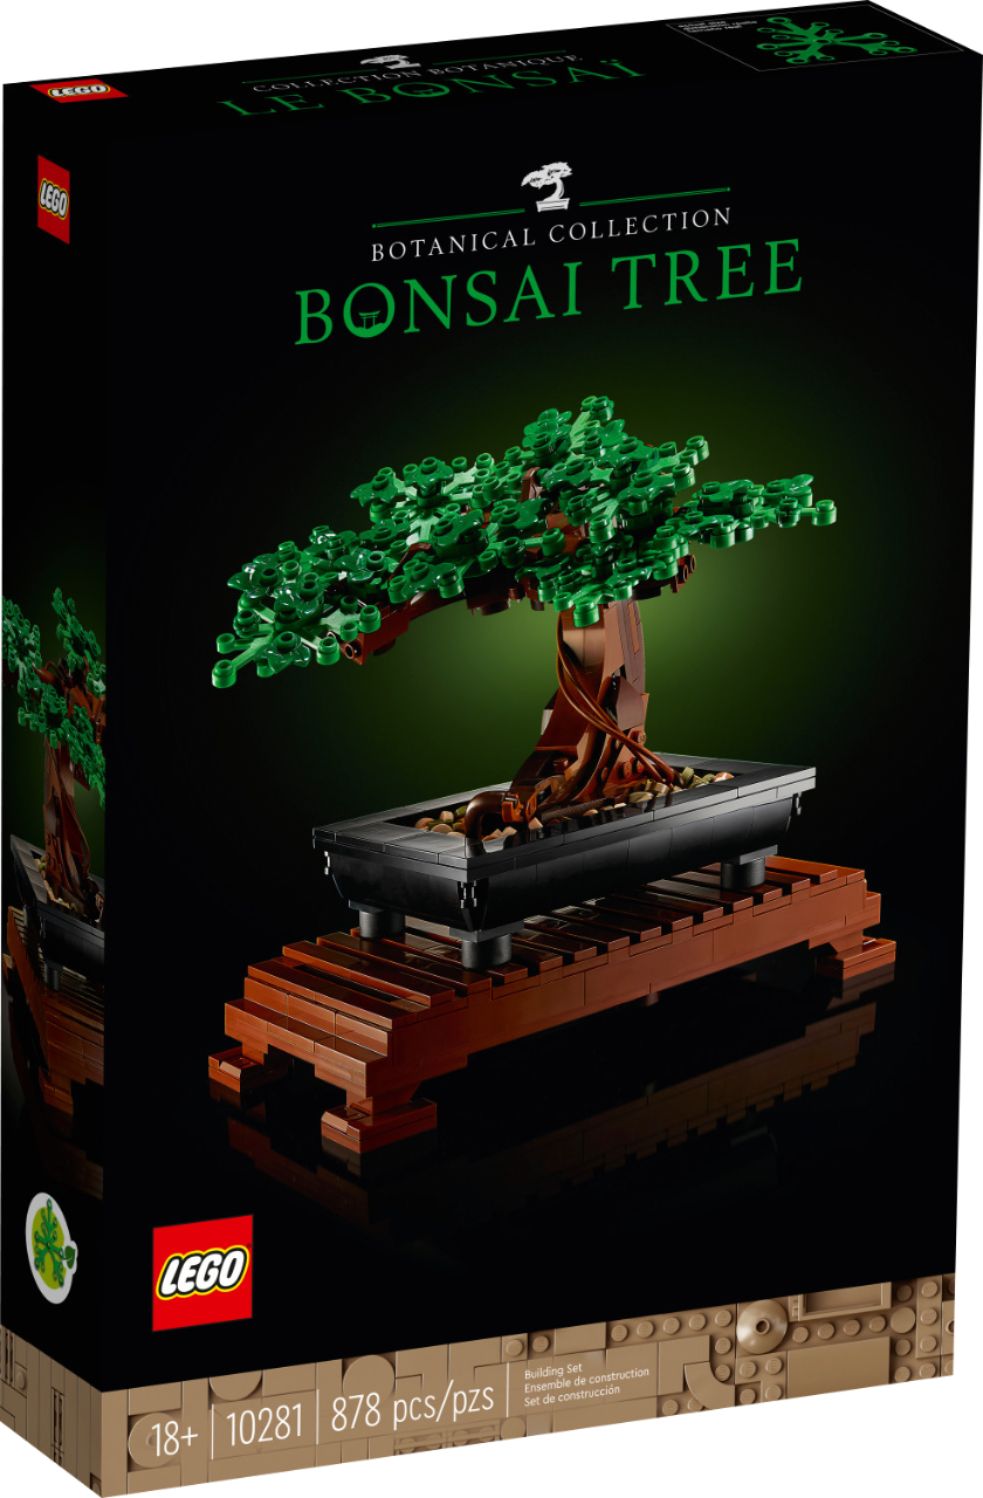 LEGO Creator Expert Bonsai Tree 10281 6332928 - Best Buy